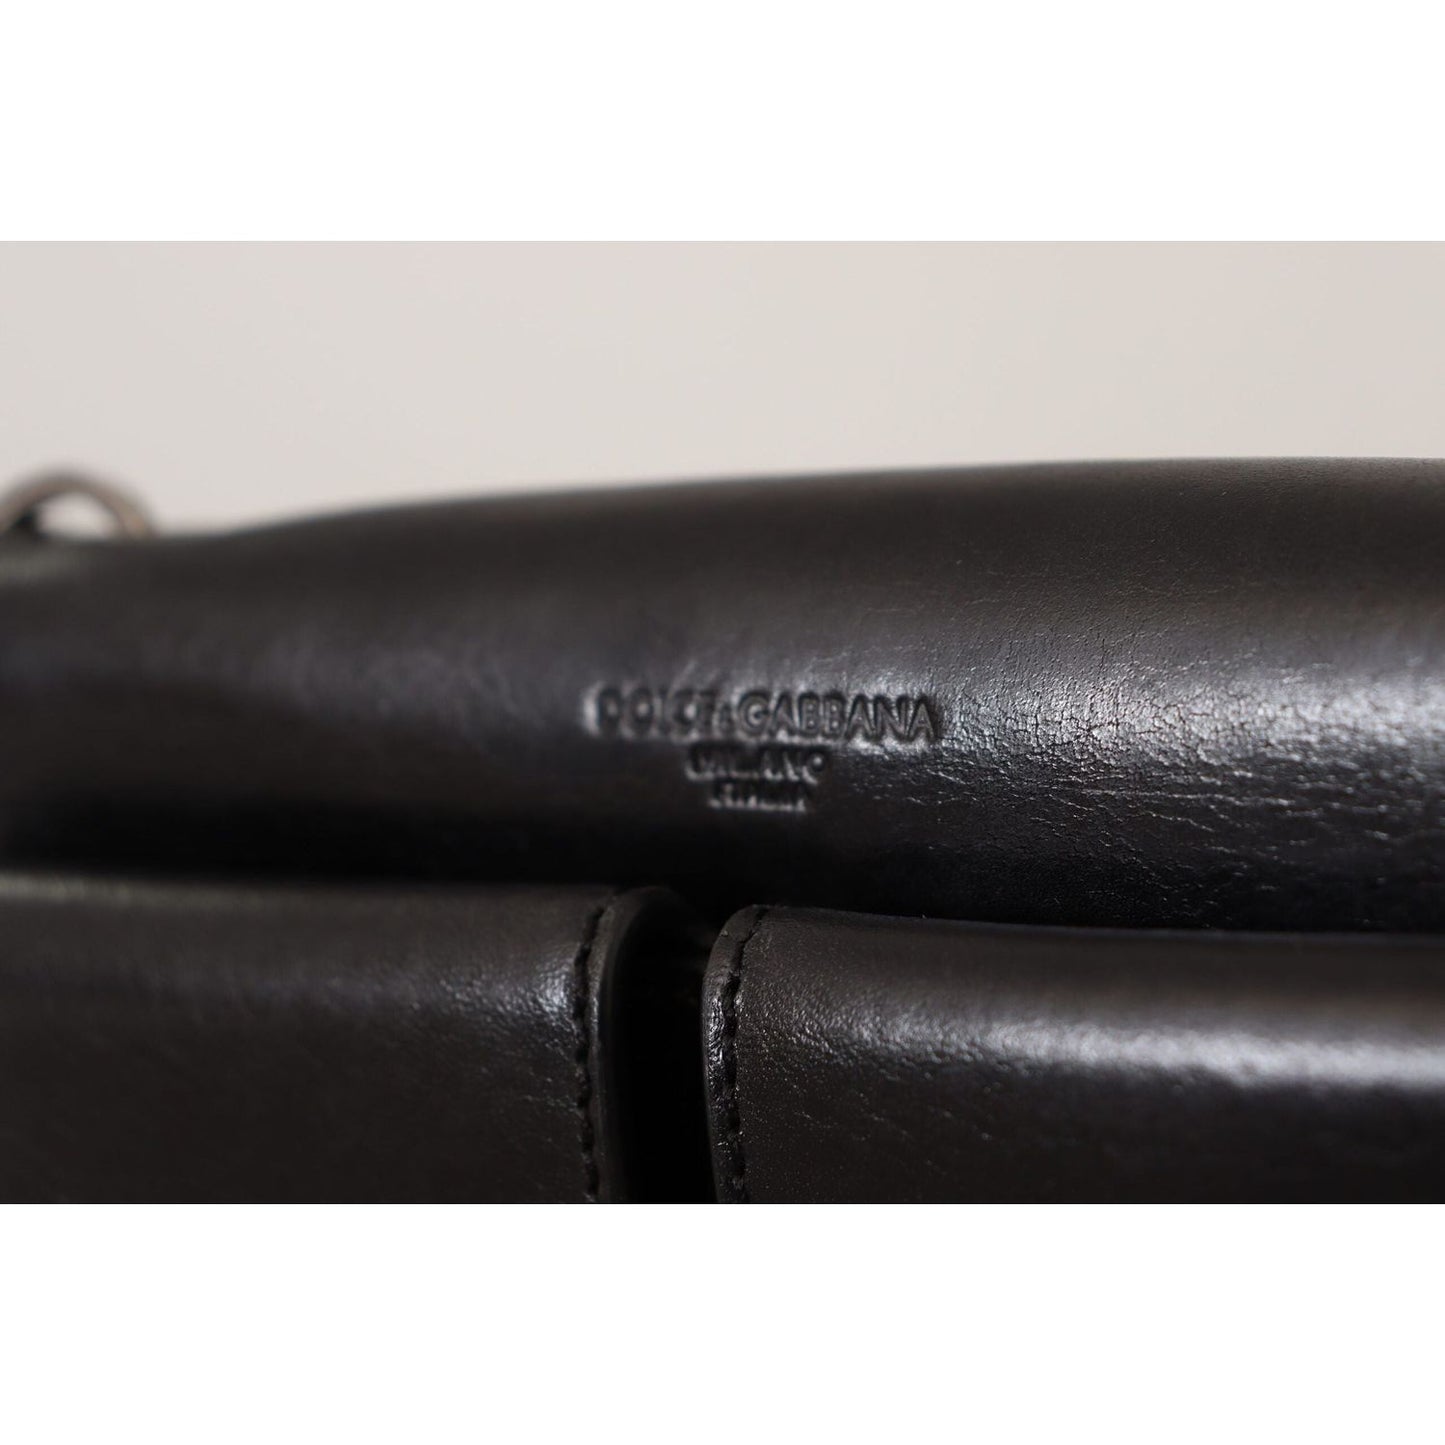 Dolce & GabbanaElegant Mini Leather Wallet in Timeless BlackMcRichard Designer Brands£629.00